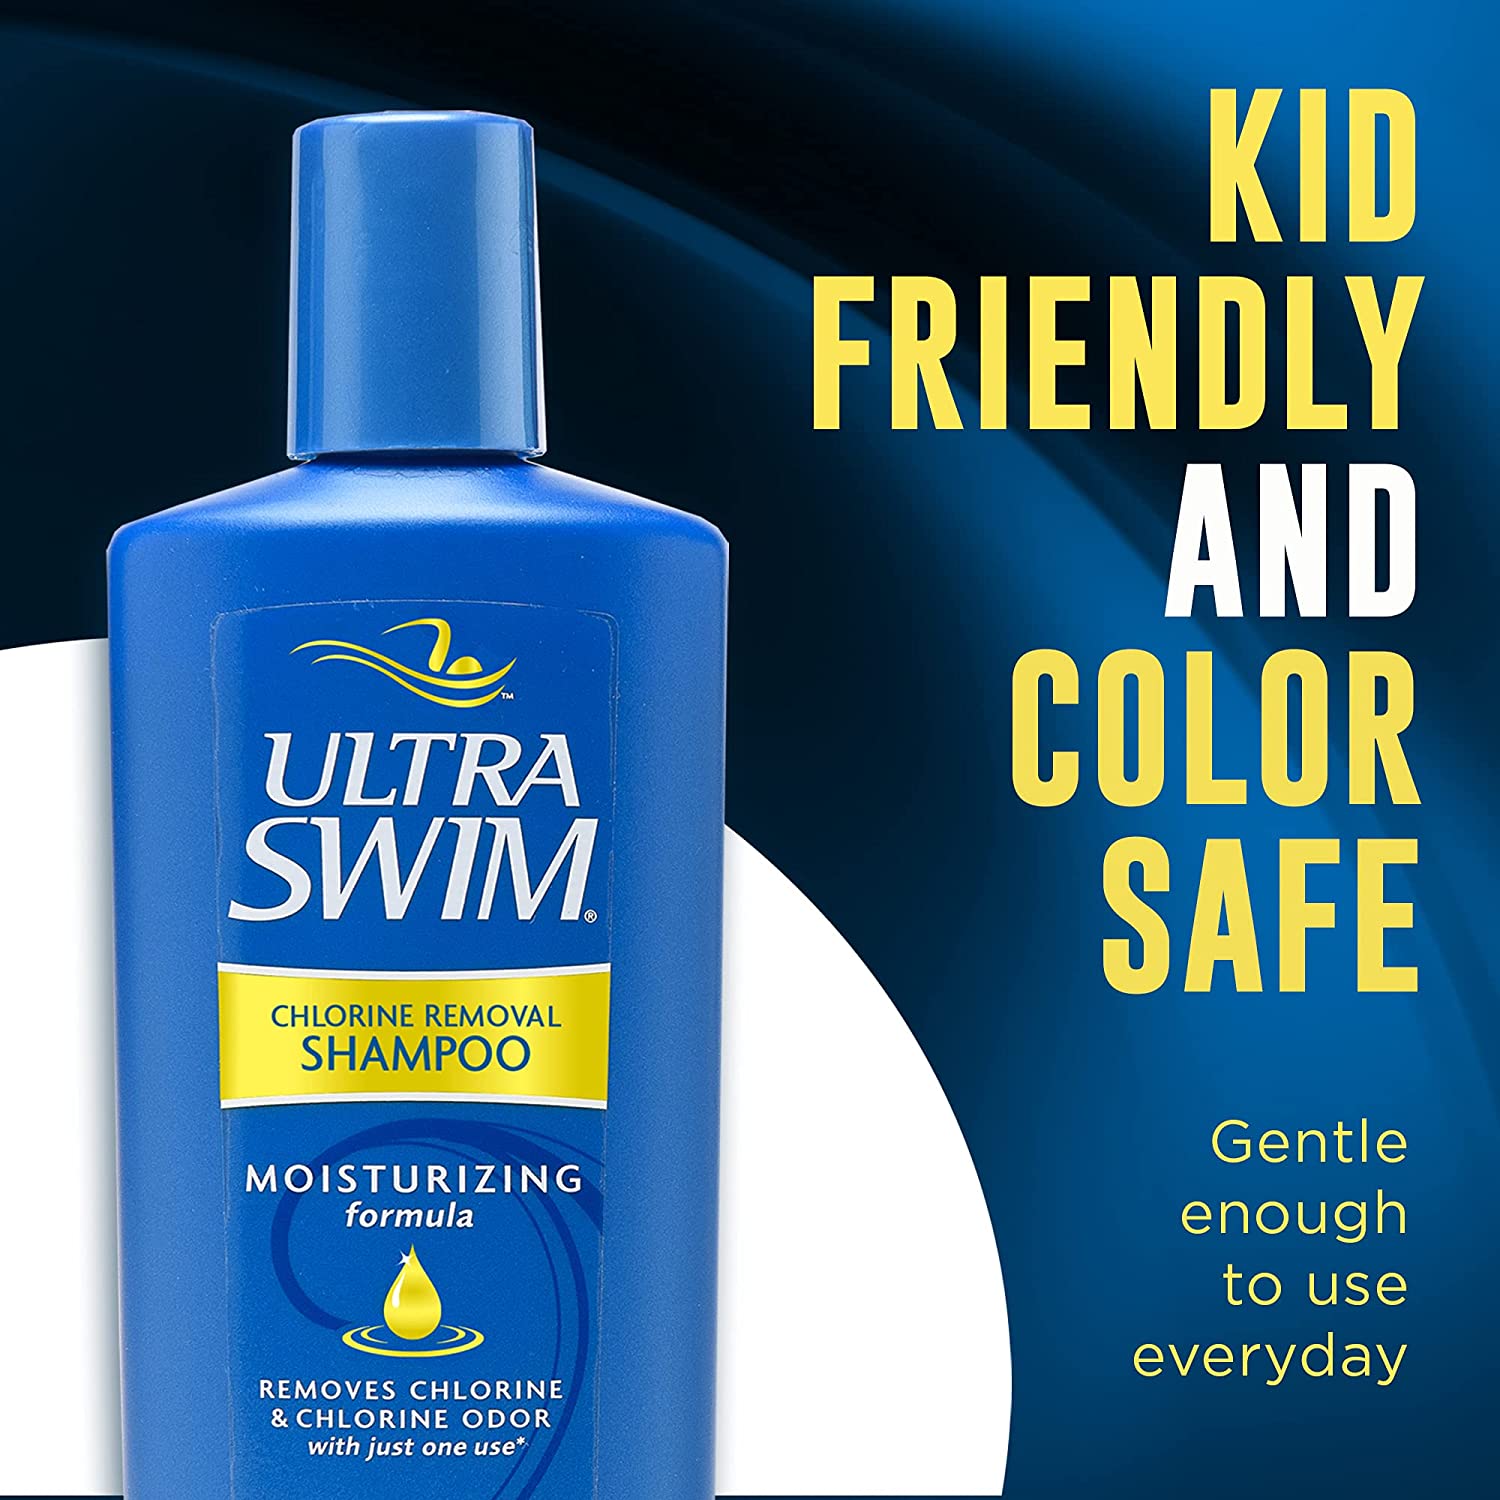 UltraSwim Chlorine Removal Shampoo, Moisturizing Formula 7 oz - image 5 of 12